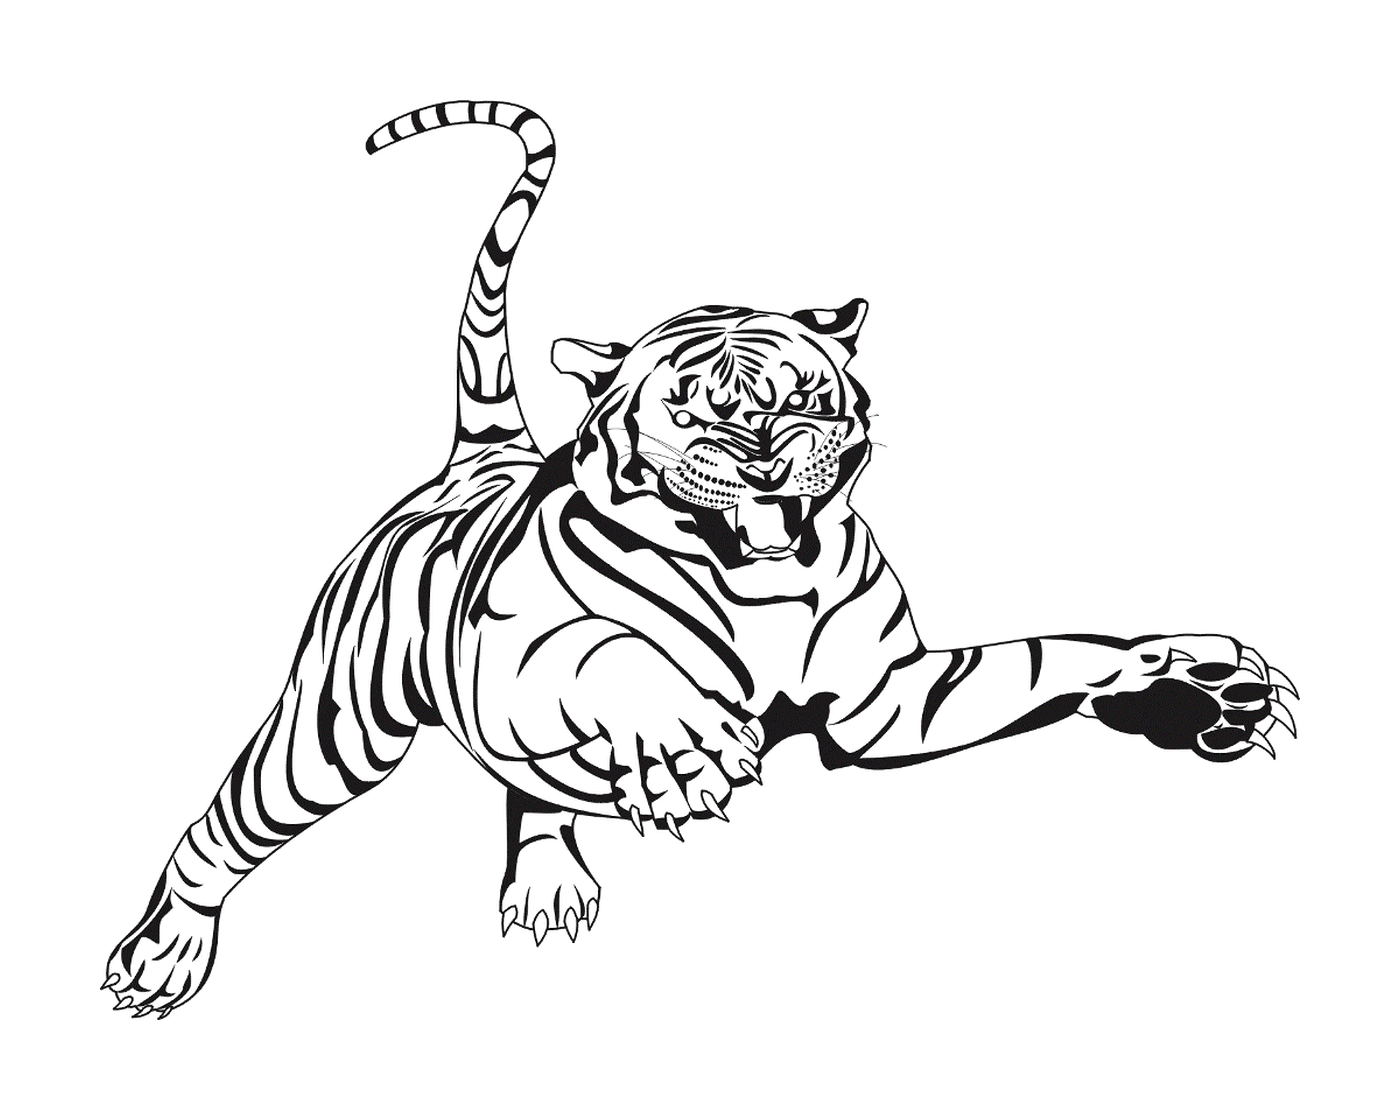   Un tigre en plein saut 